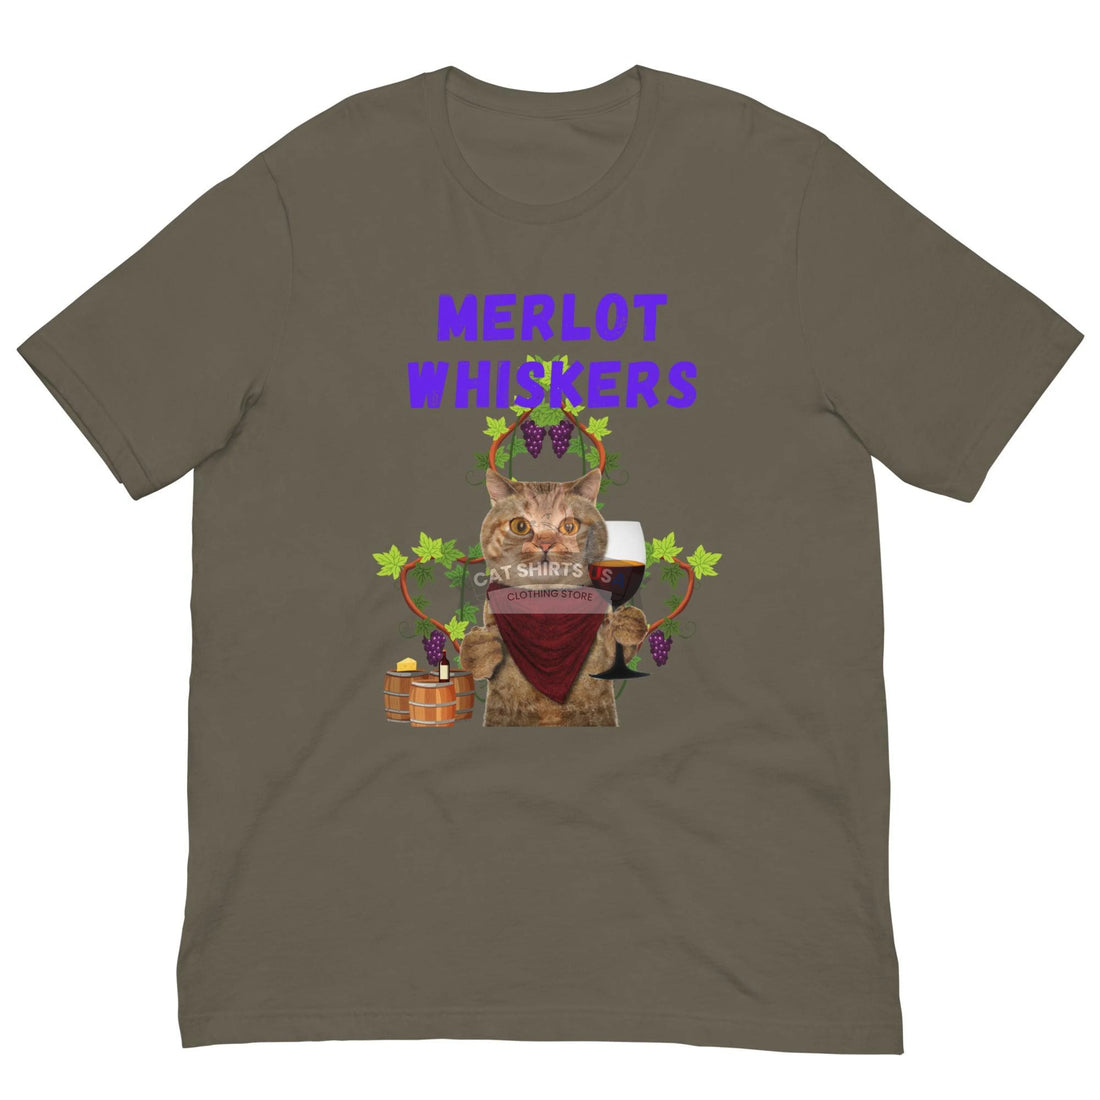 Merlow Whiskers Cat Shirt - Cat Shirts USA